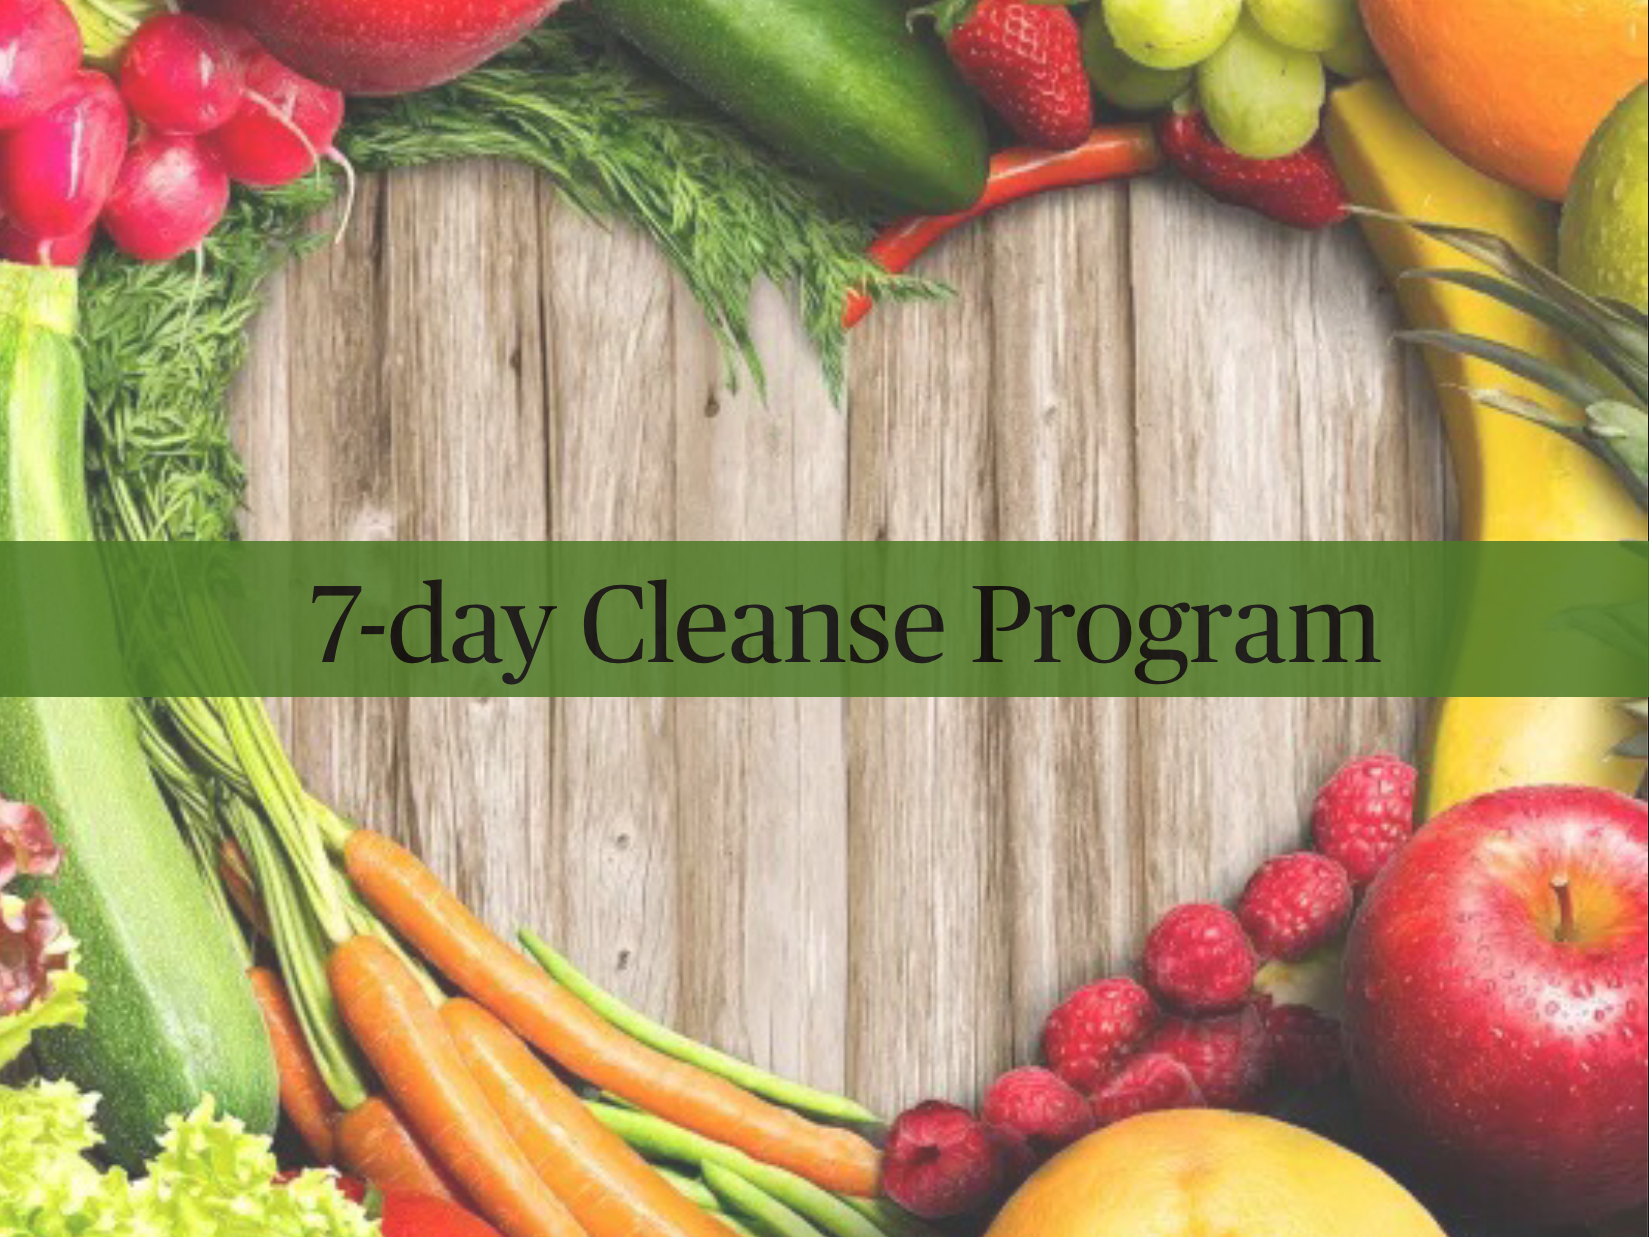 Workshop: 7-day Cleanse Program